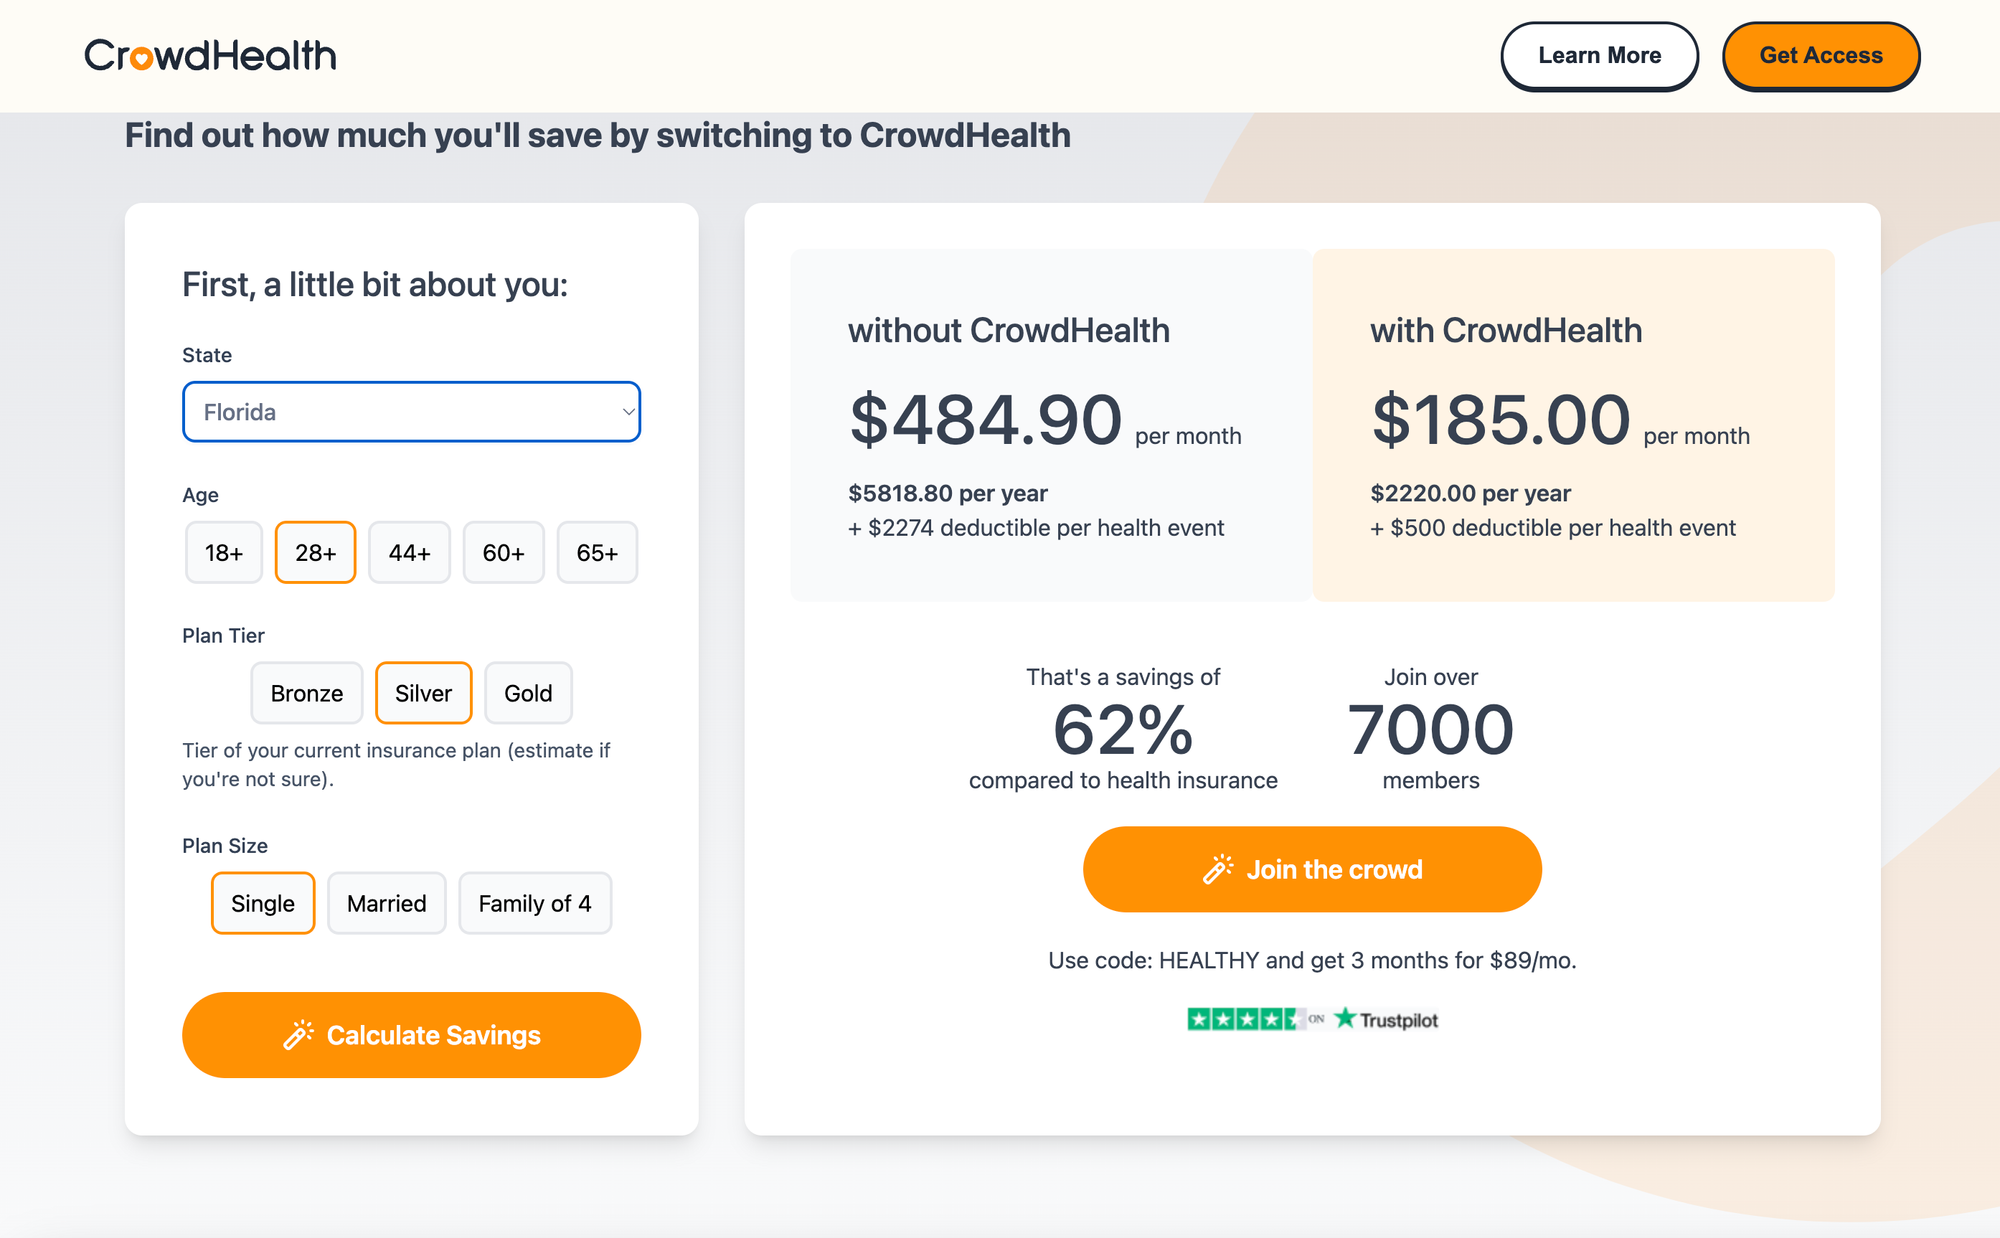 Calculate Your Savings With Crowdhealth